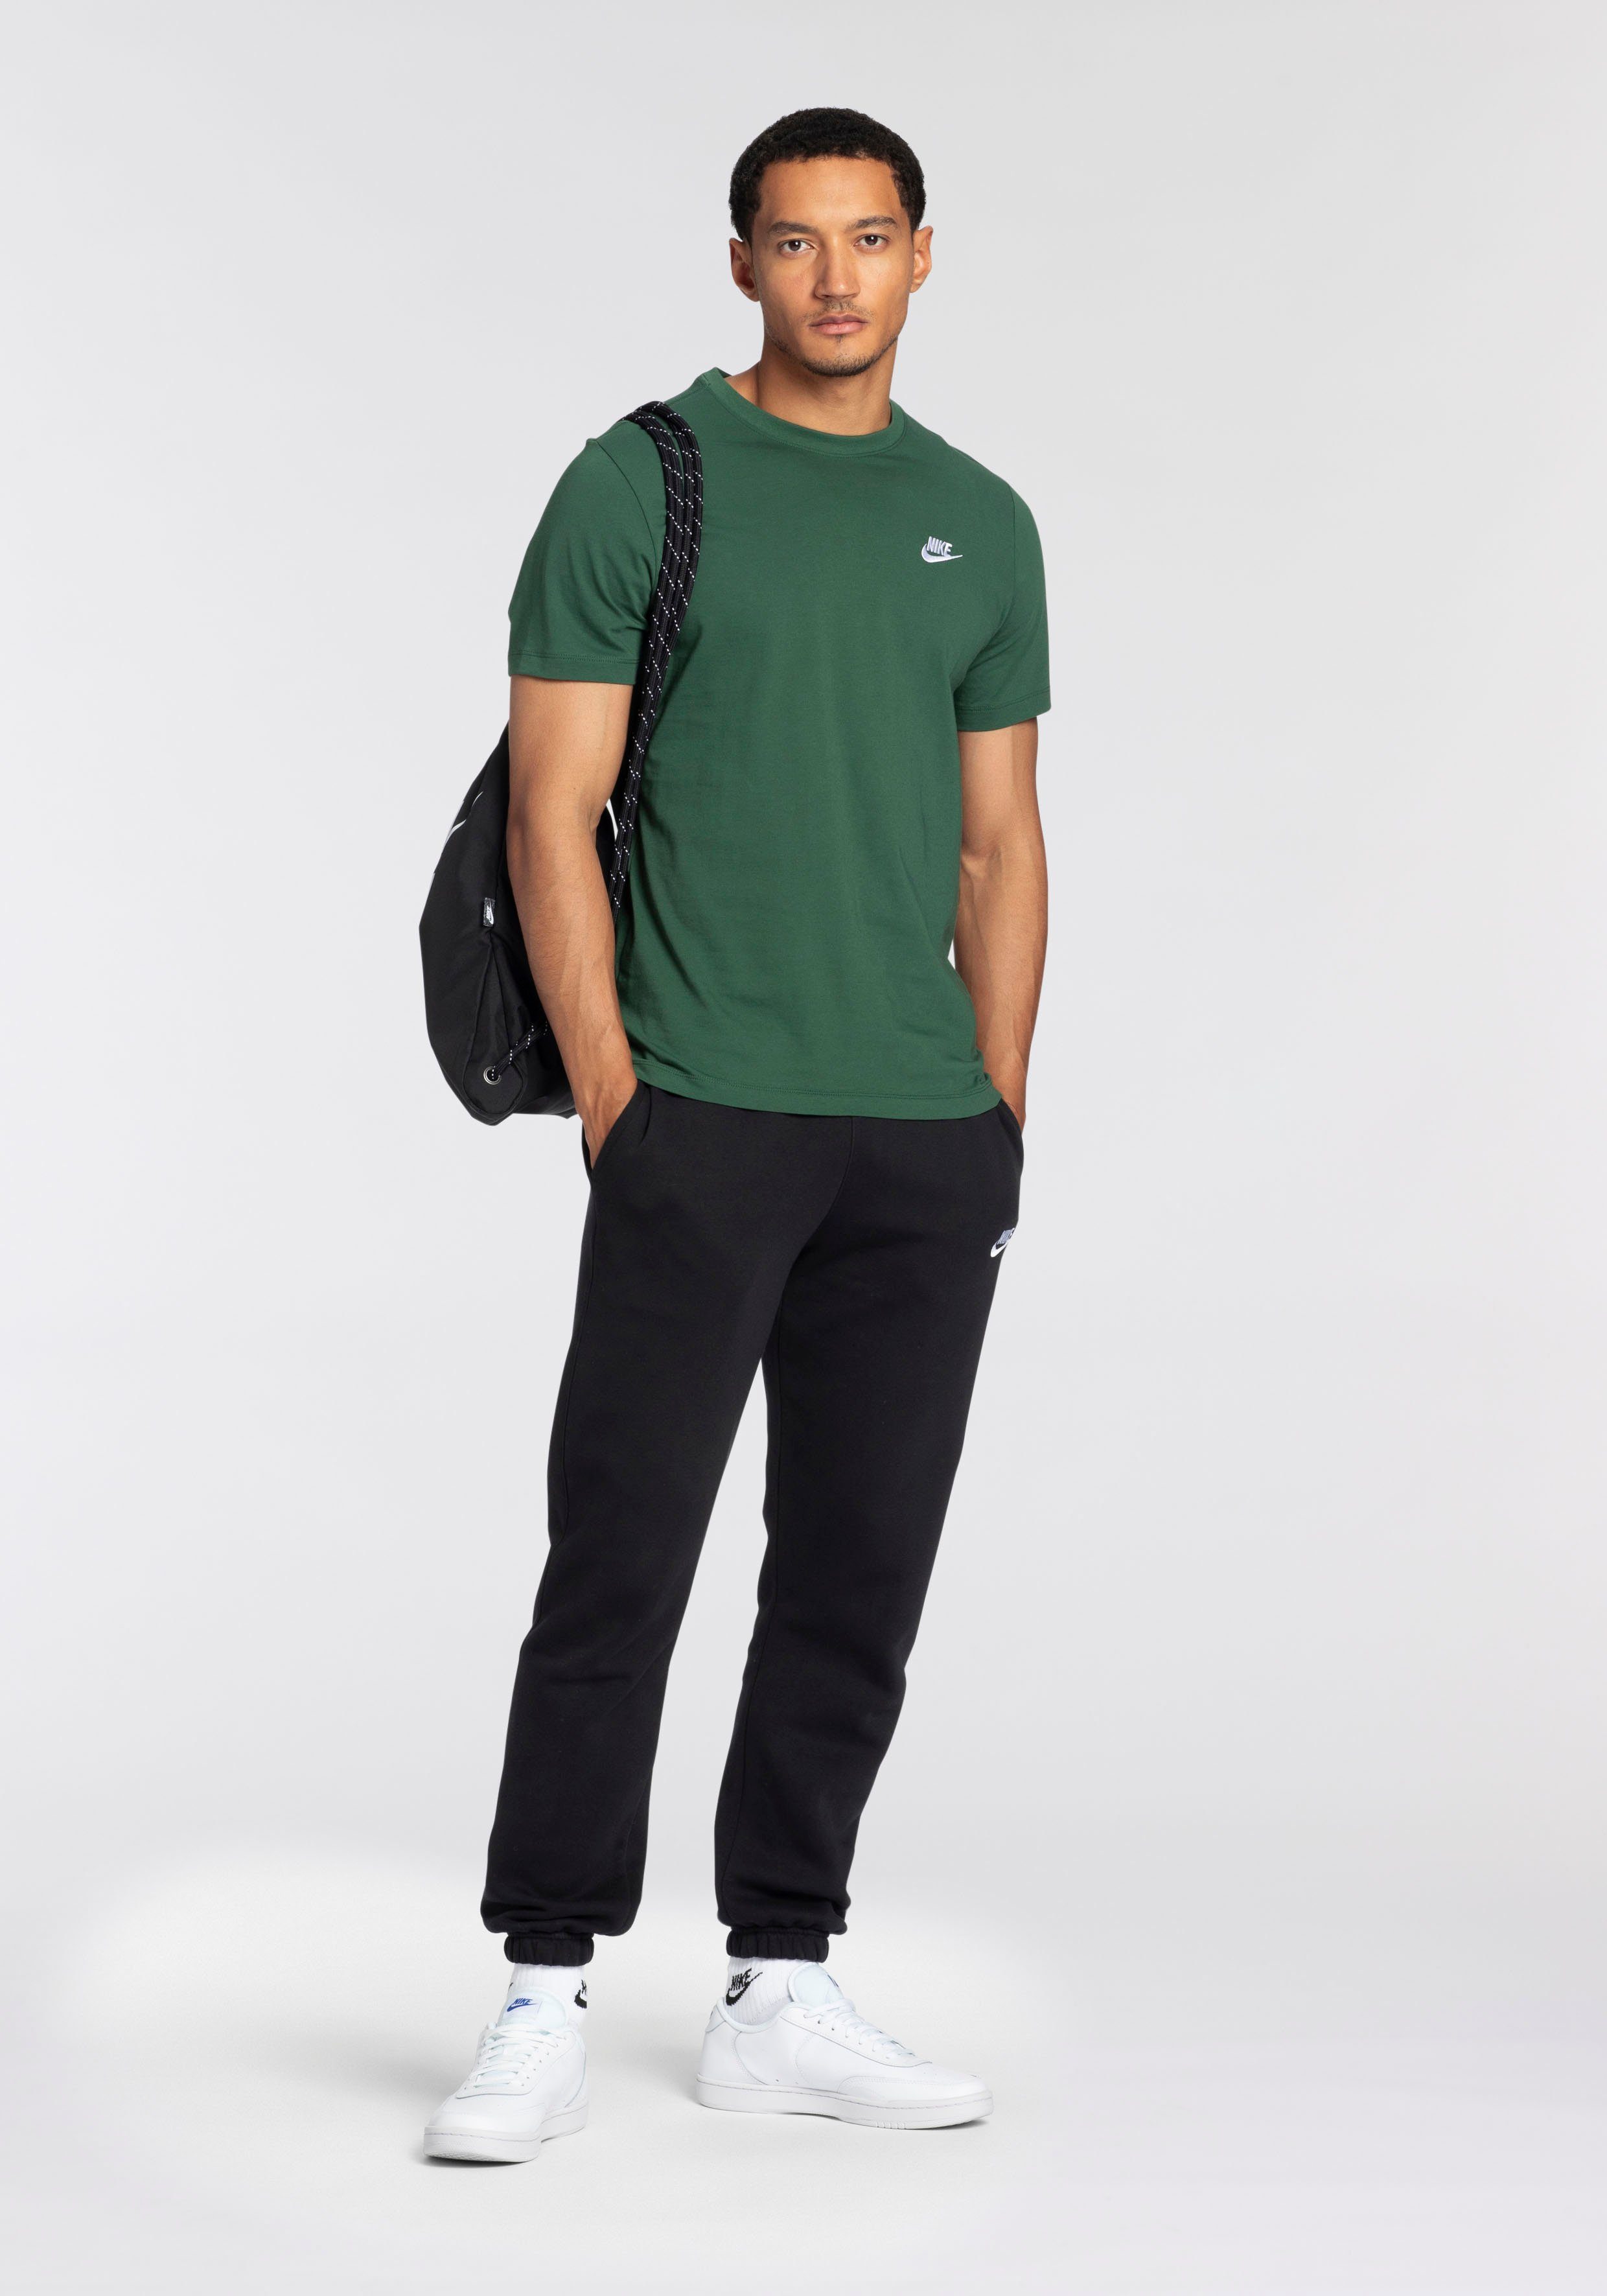 FIR T-SHIRT Nike T-Shirt CLUB MEN'S Sportswear